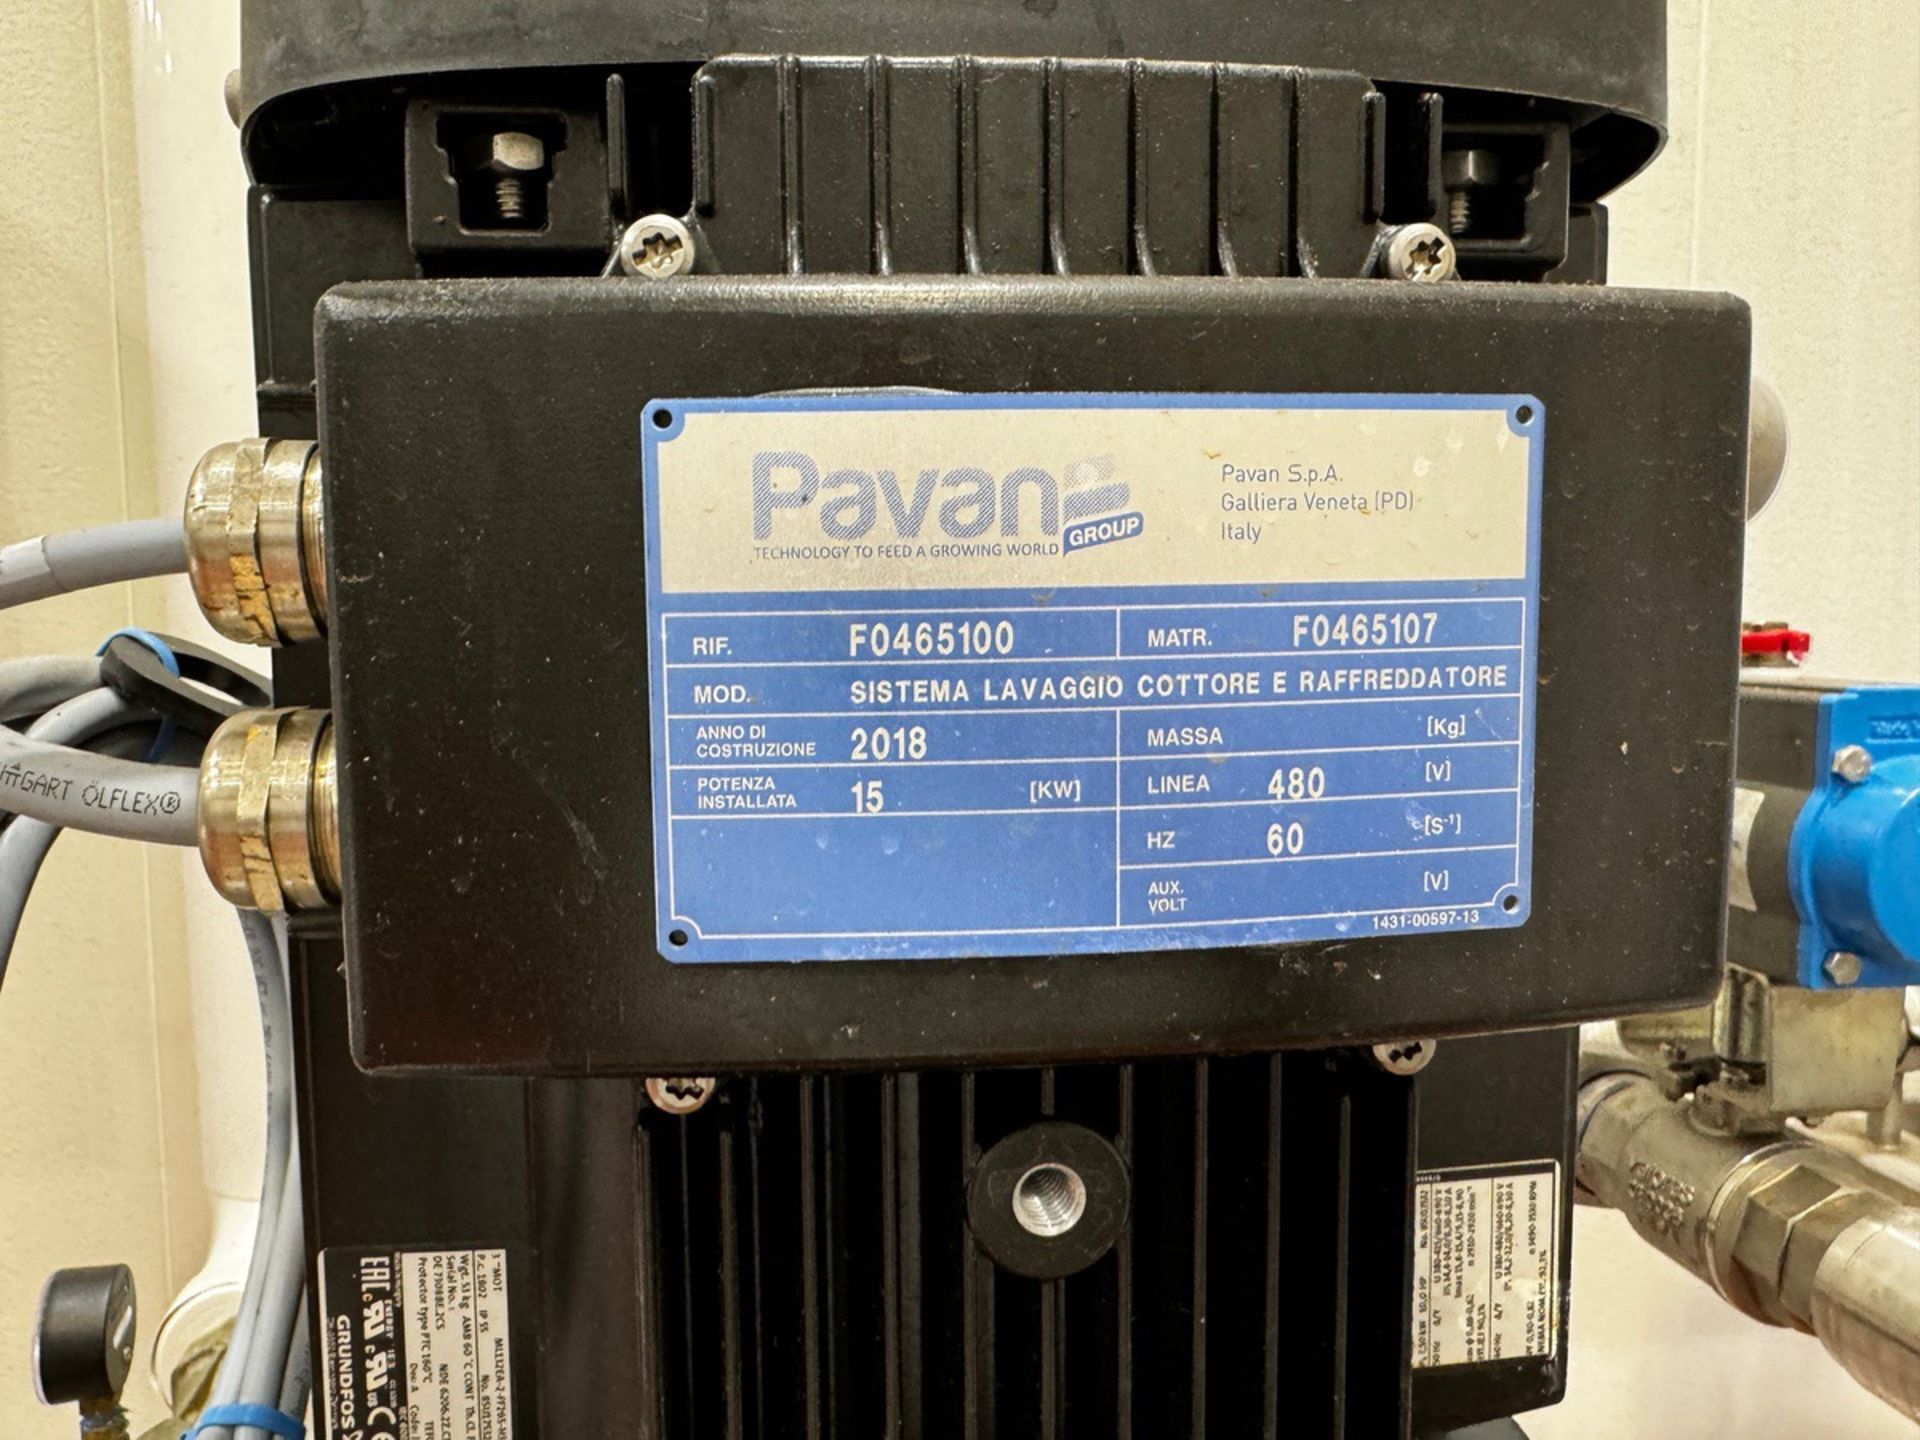 2018 Pavan Sistema Lavaggio Cottore & Raffreddatore Chilled Water Pump Skid - Image 2 of 3